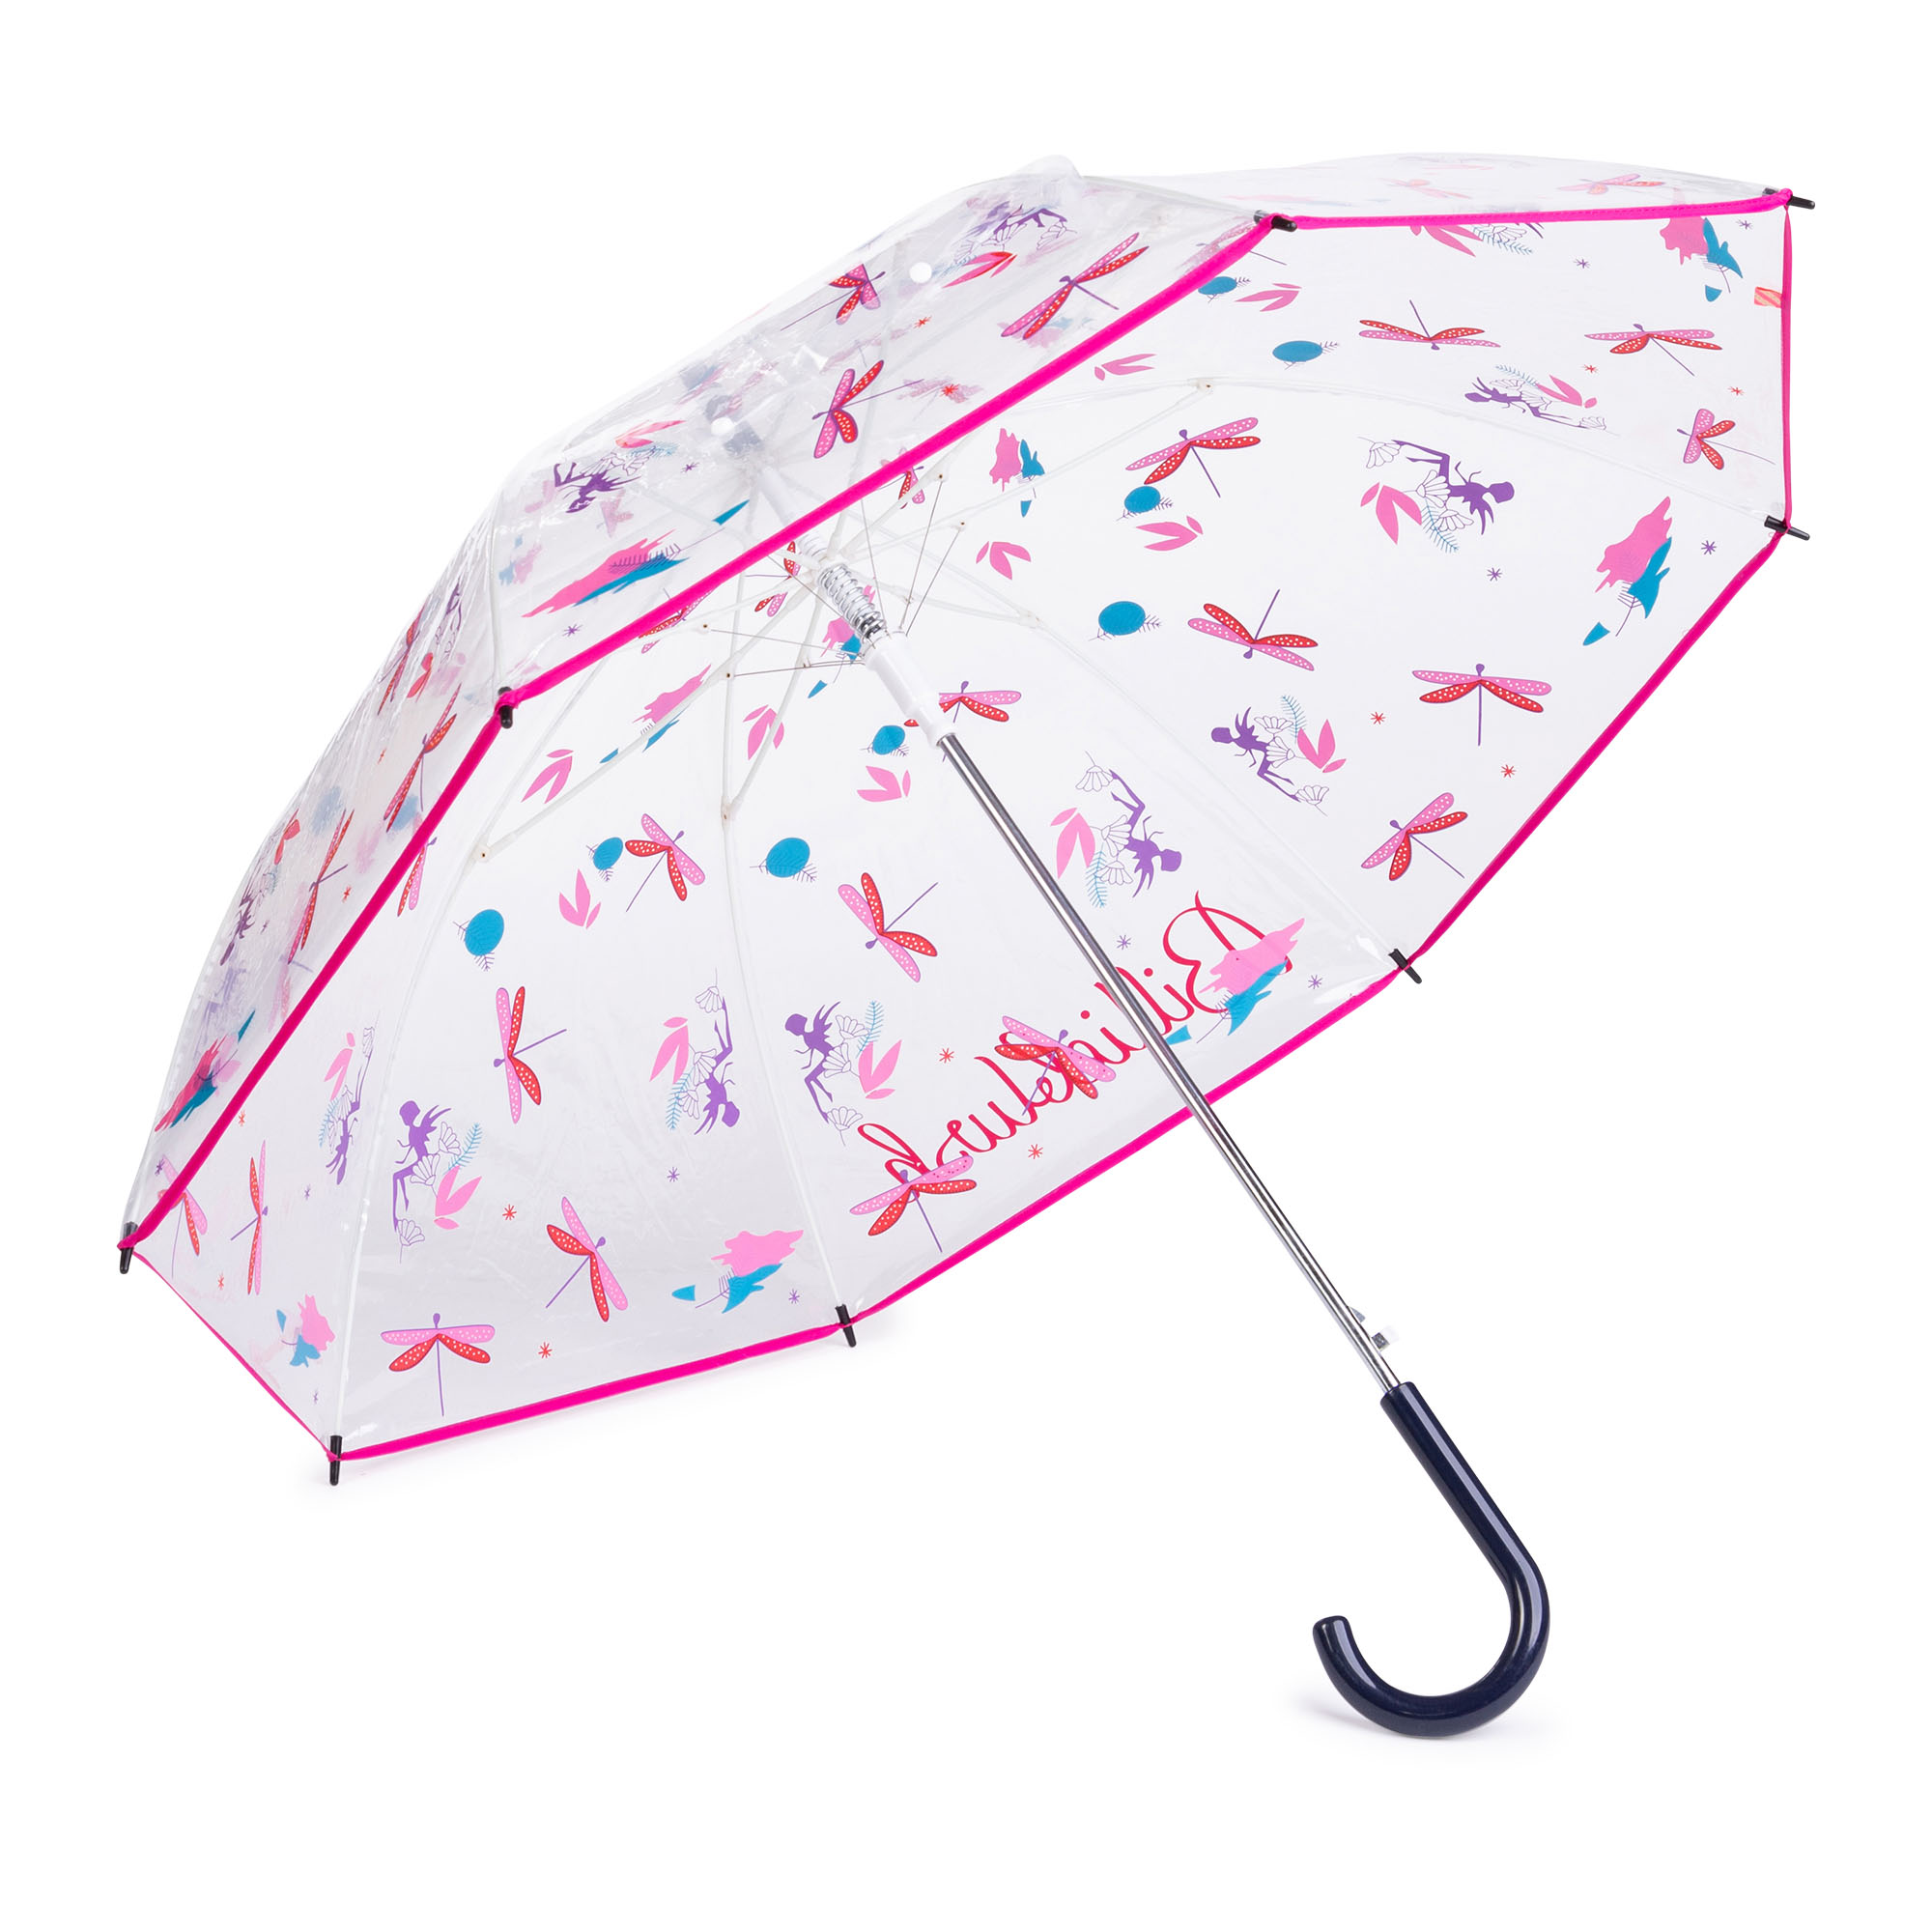 Transparent printed umbrella BILLIEBLUSH for GIRL